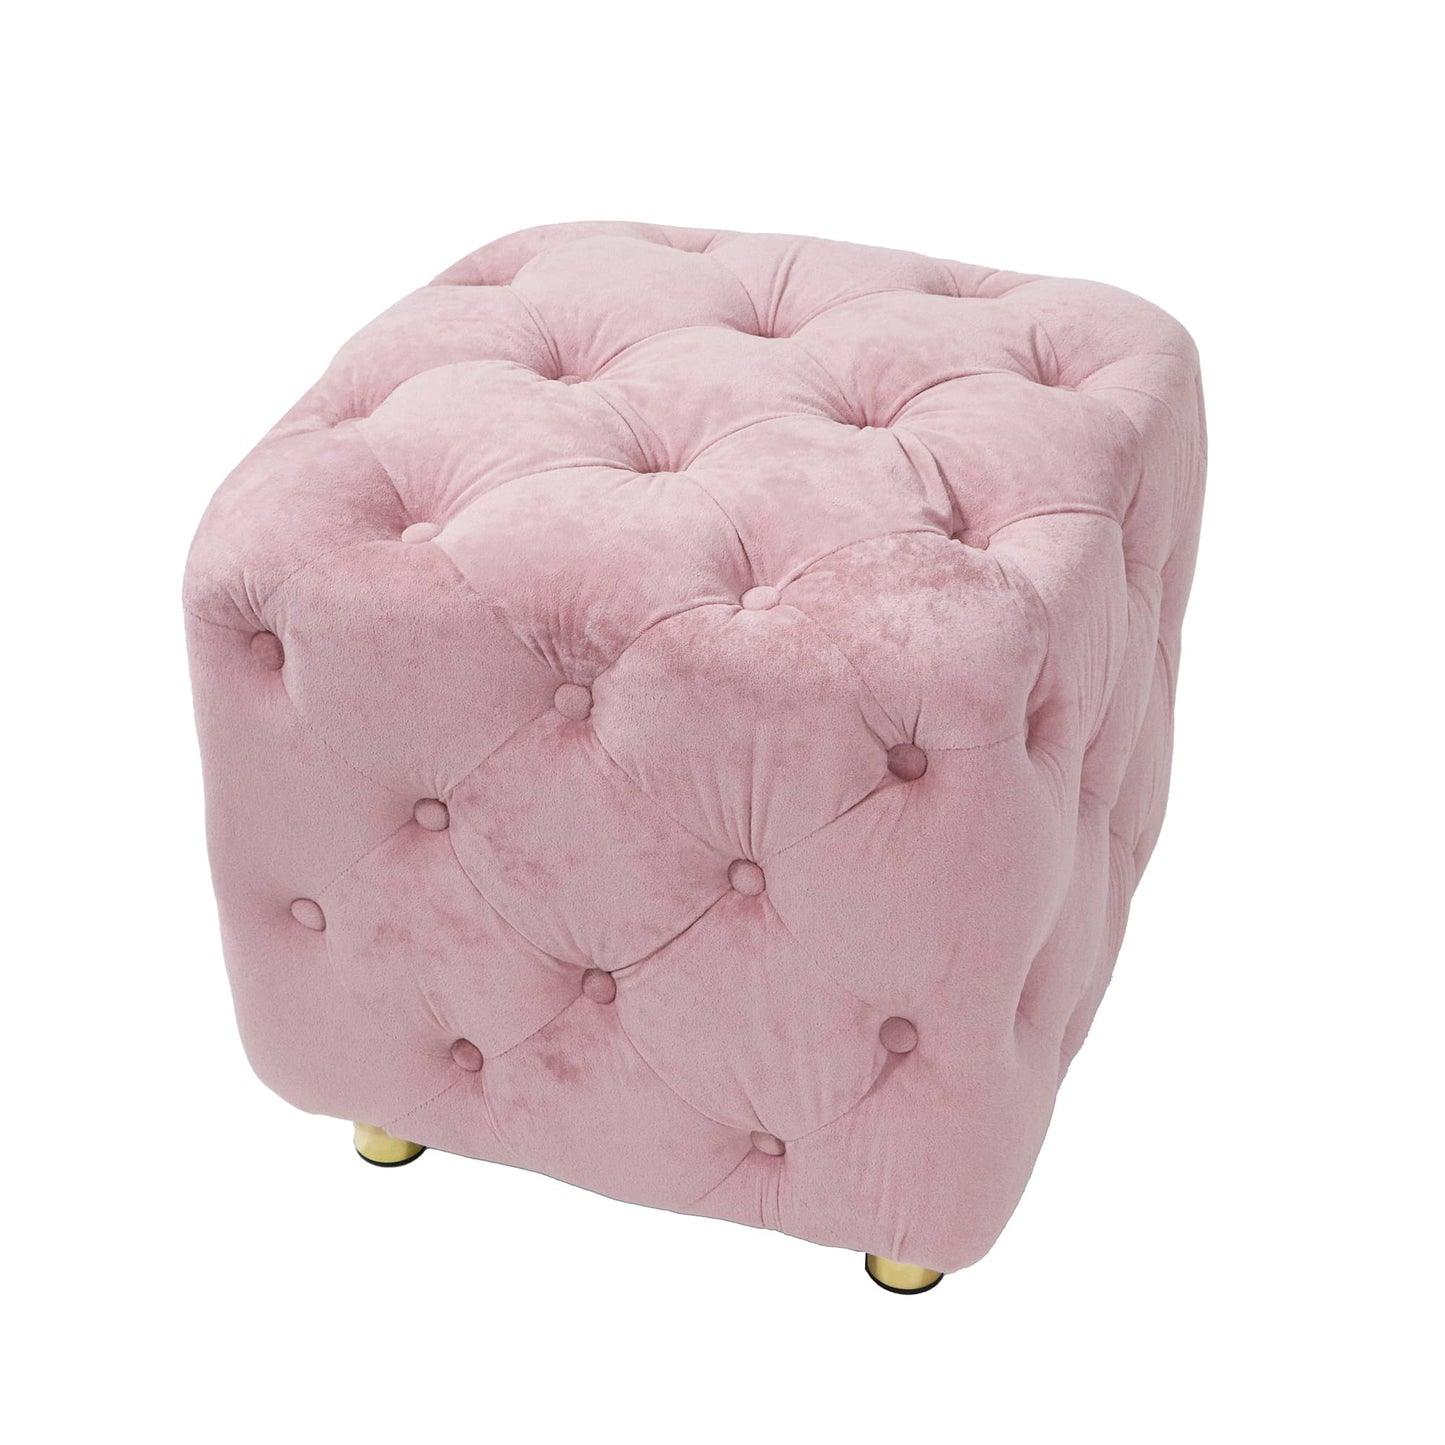 Modern Velvet Upholstered Square Ottoman, Exquisite Small Soft Foot Stool- Pink